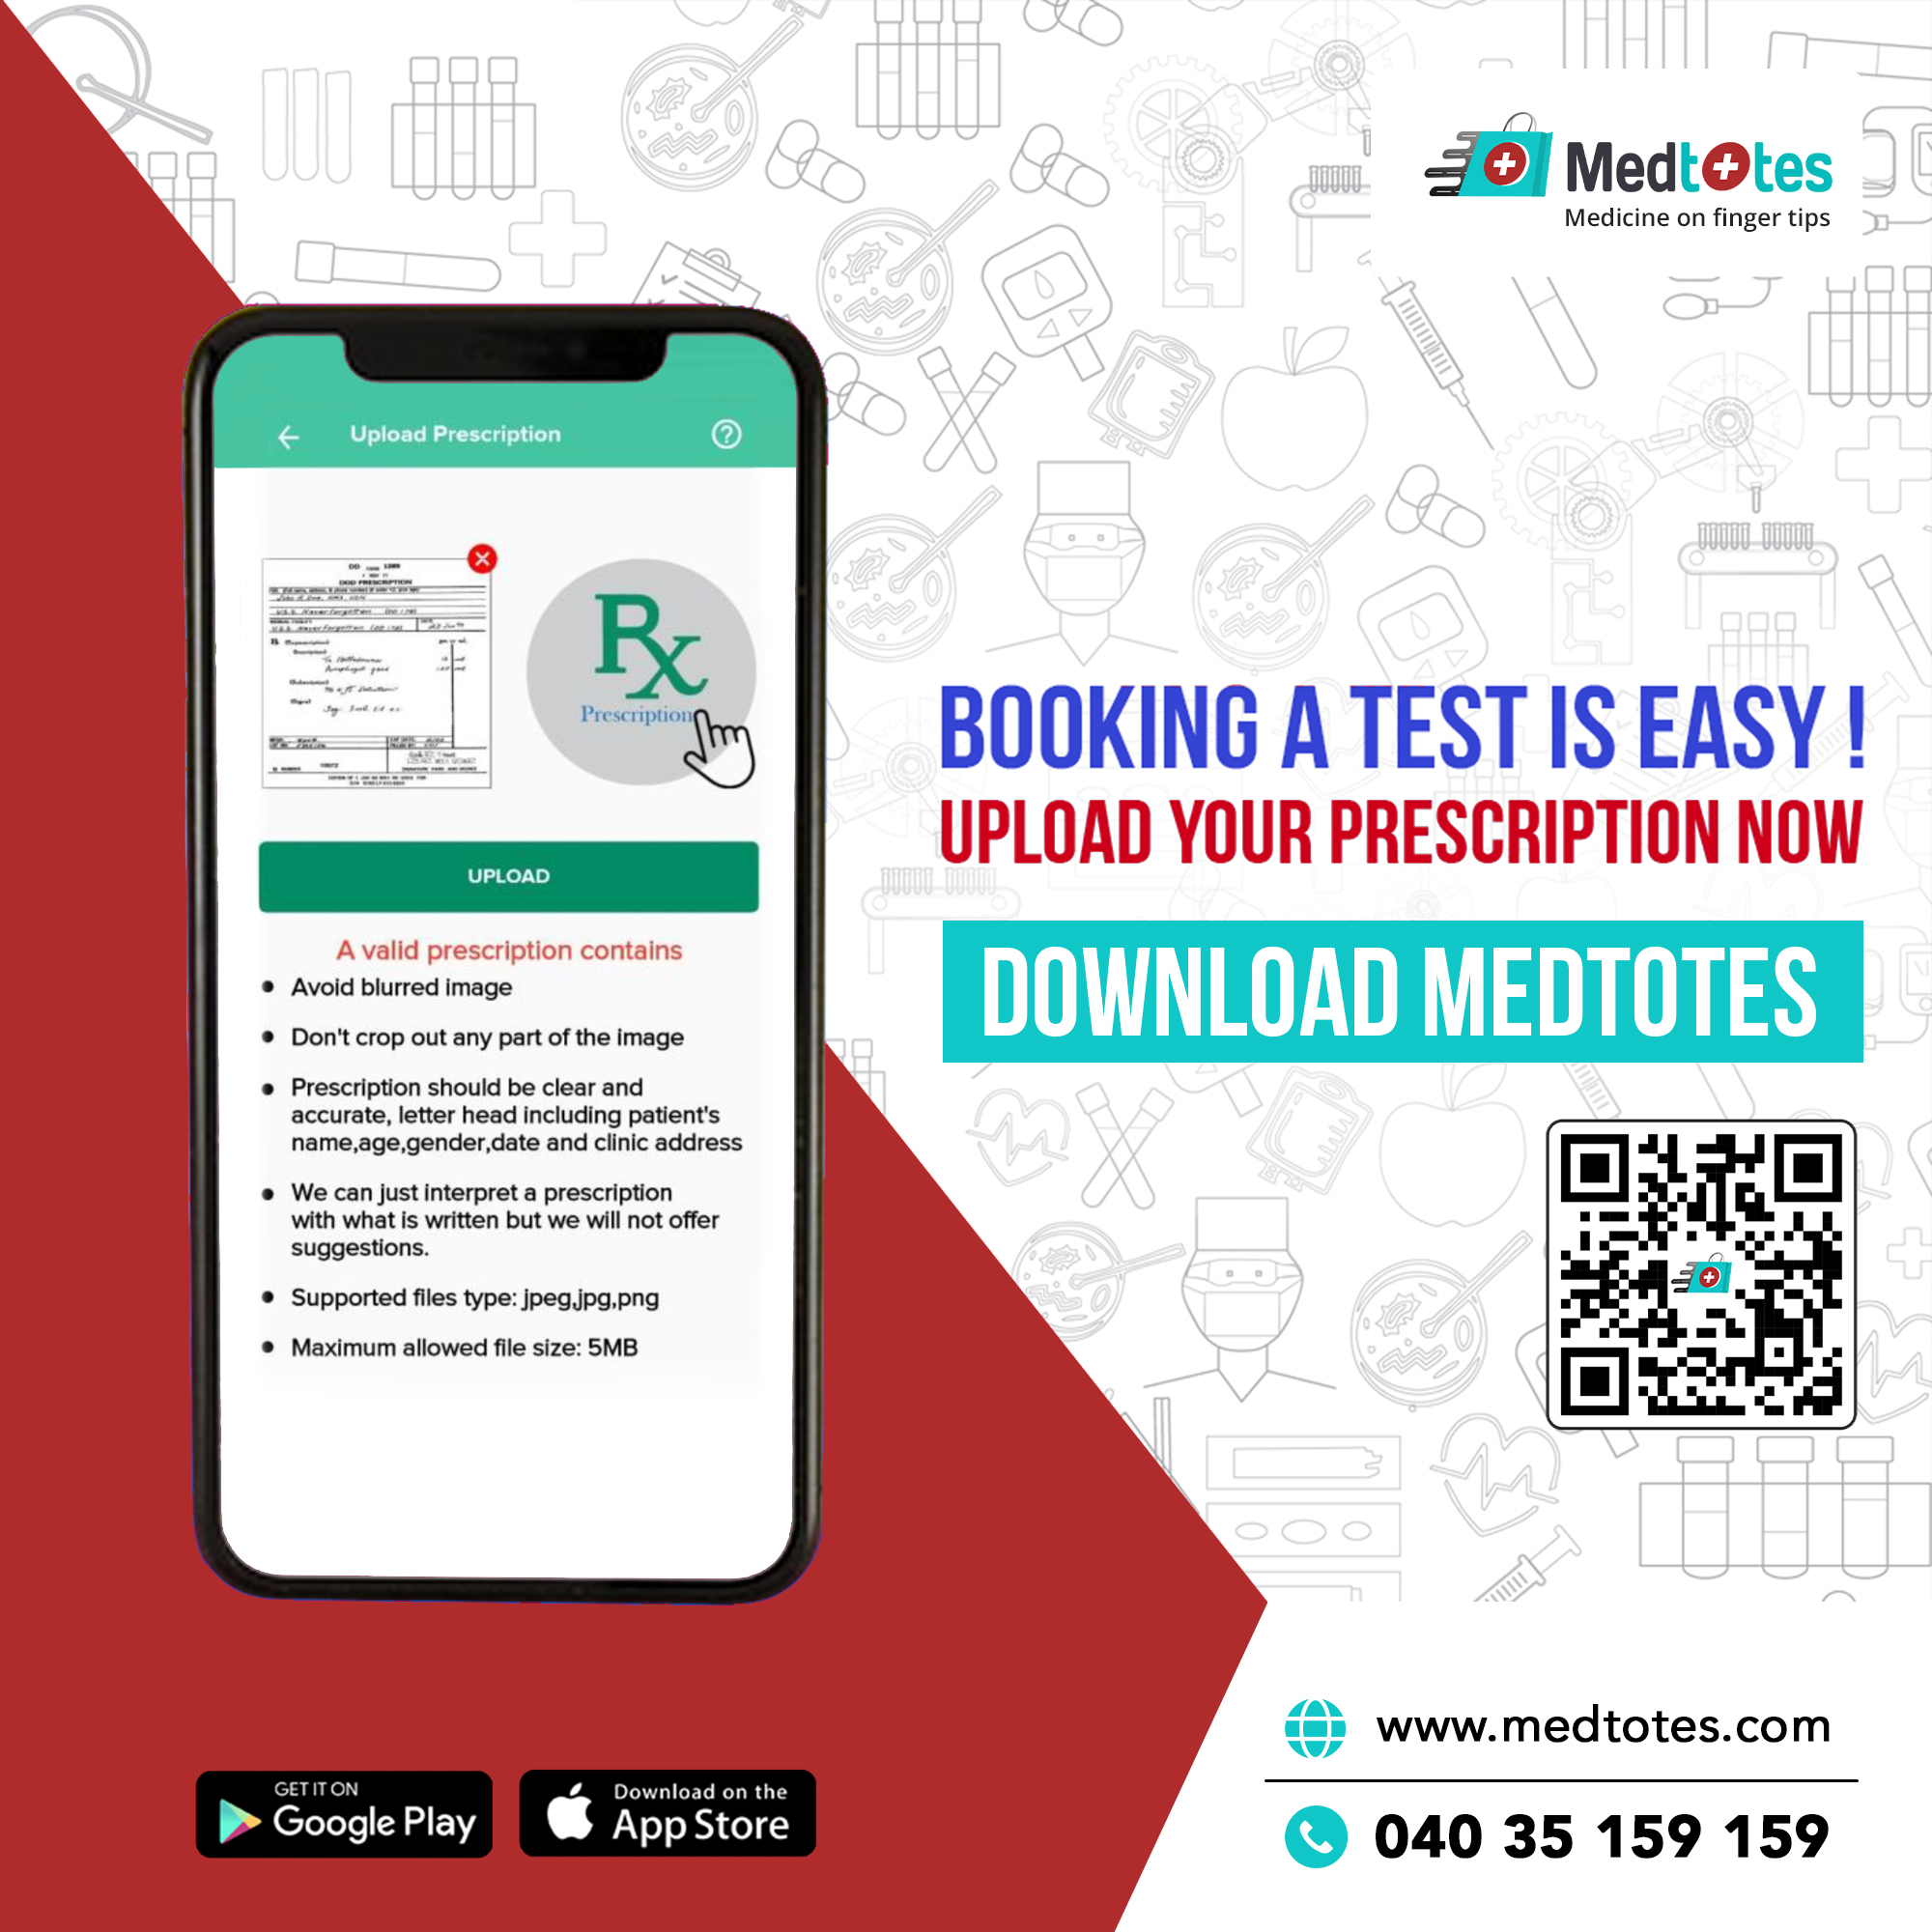 Upload your prescription on Medtotes app